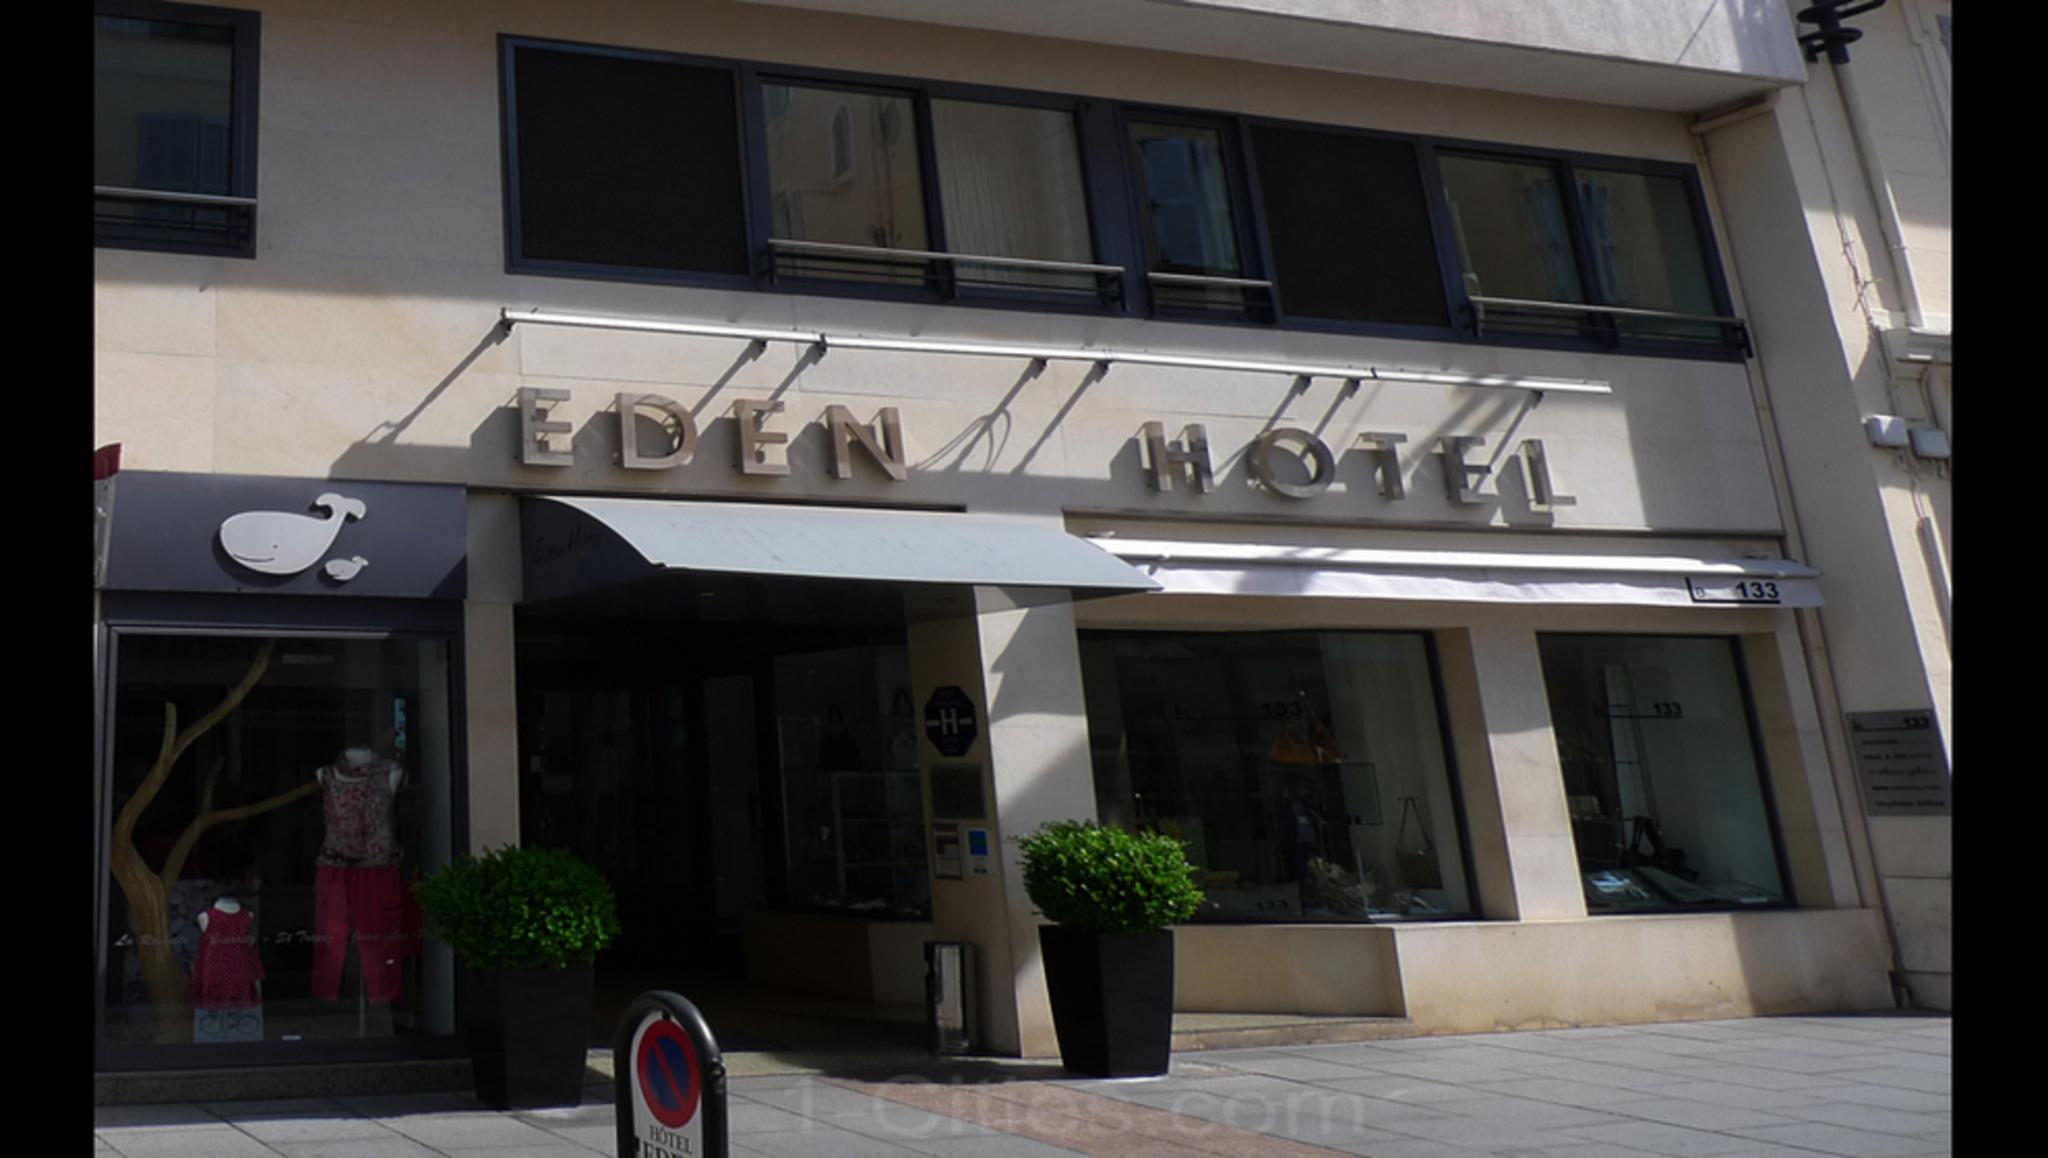 Eden Hotel & Spa en Cannes | BestDay.com